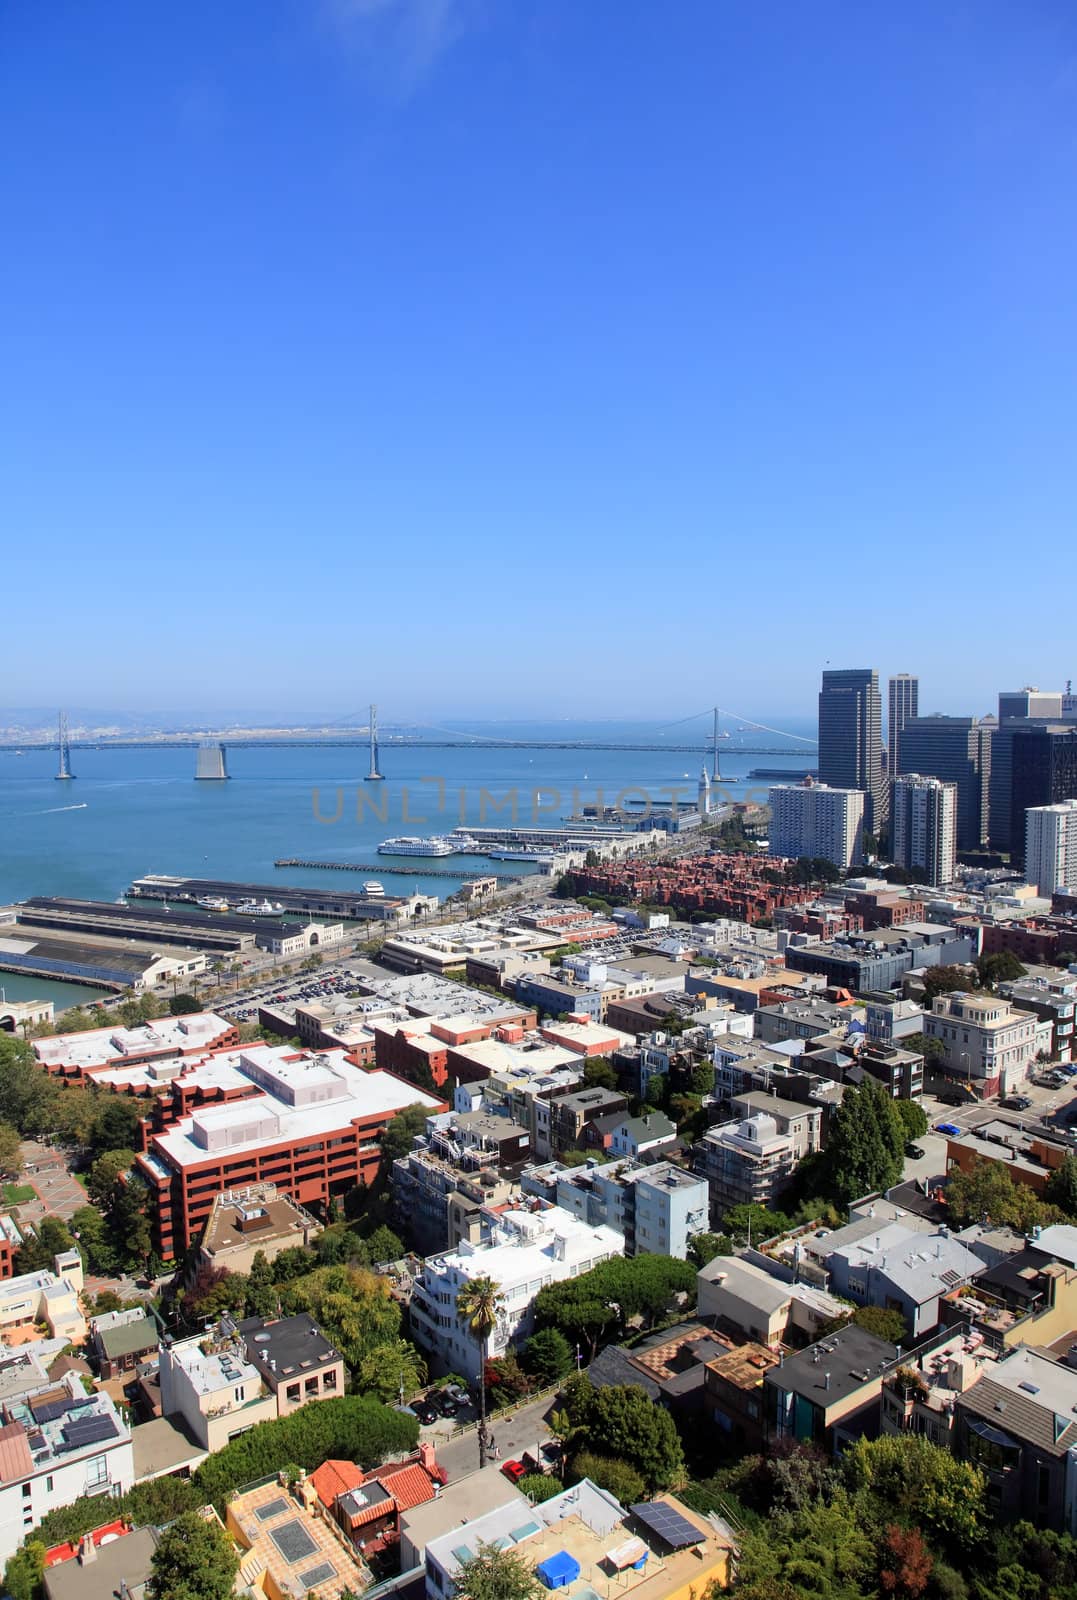 The bay bridge in San Francisco  by gary718